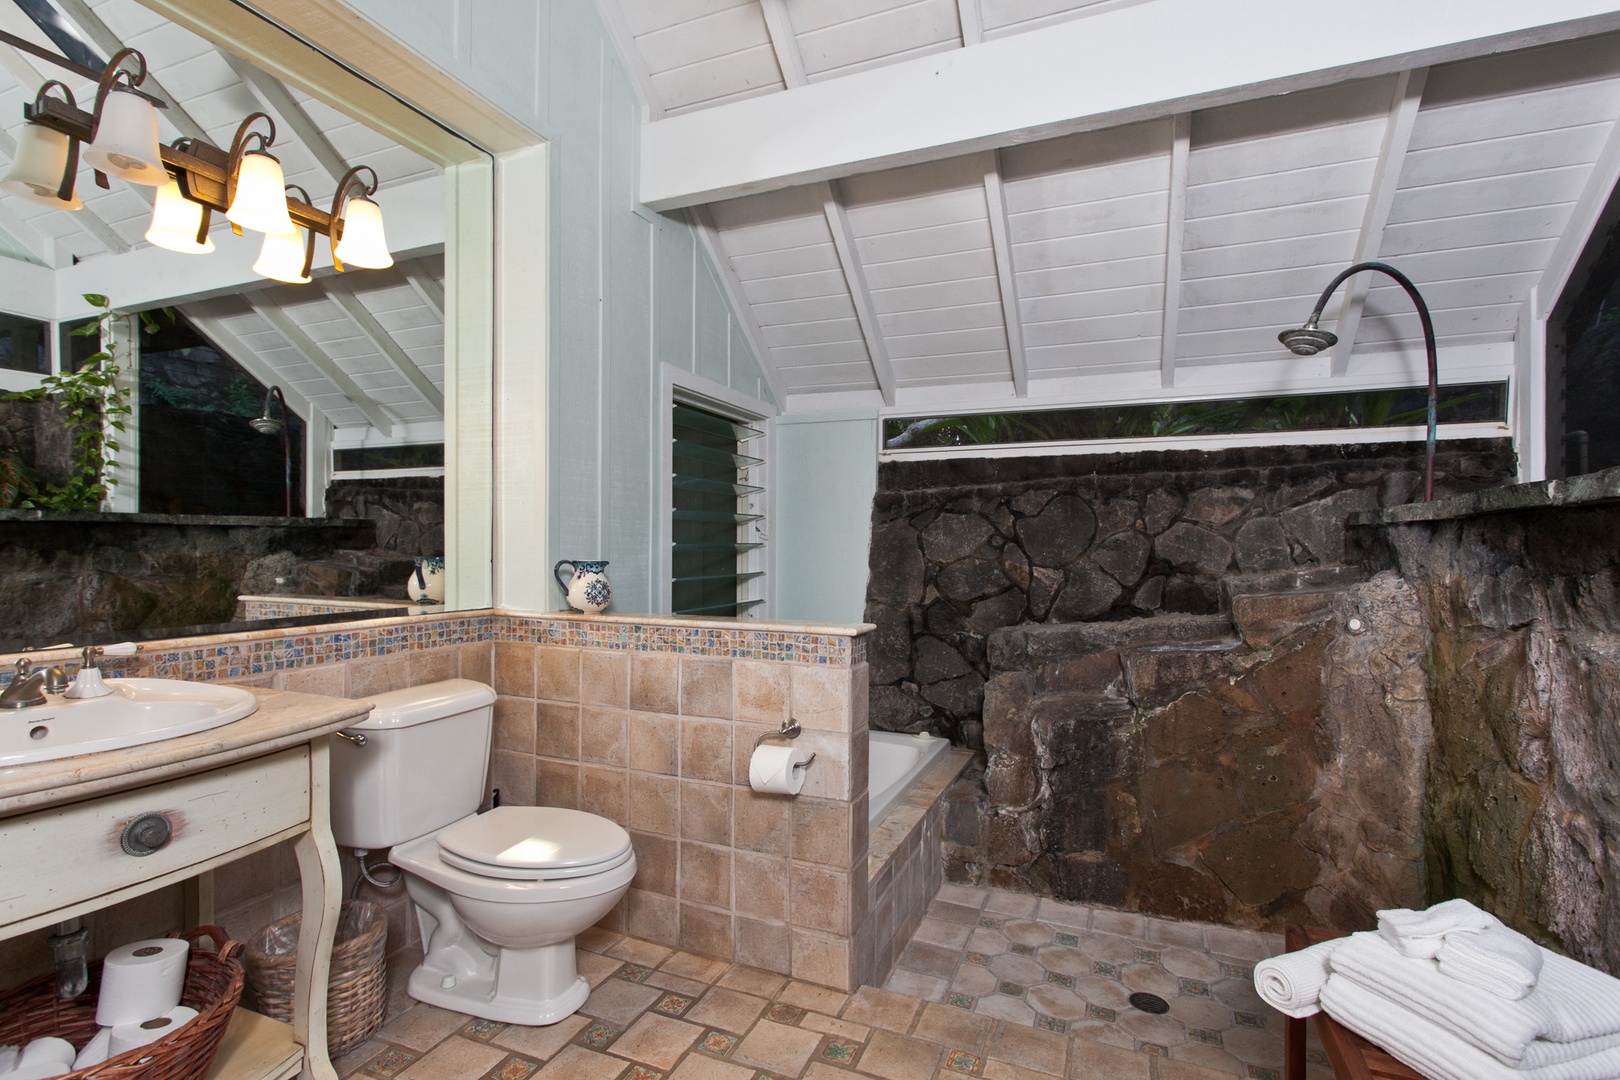 Kailua Vacation Rentals, Hale Kainalu* - The shared guest bathroom has shower/tub combination.